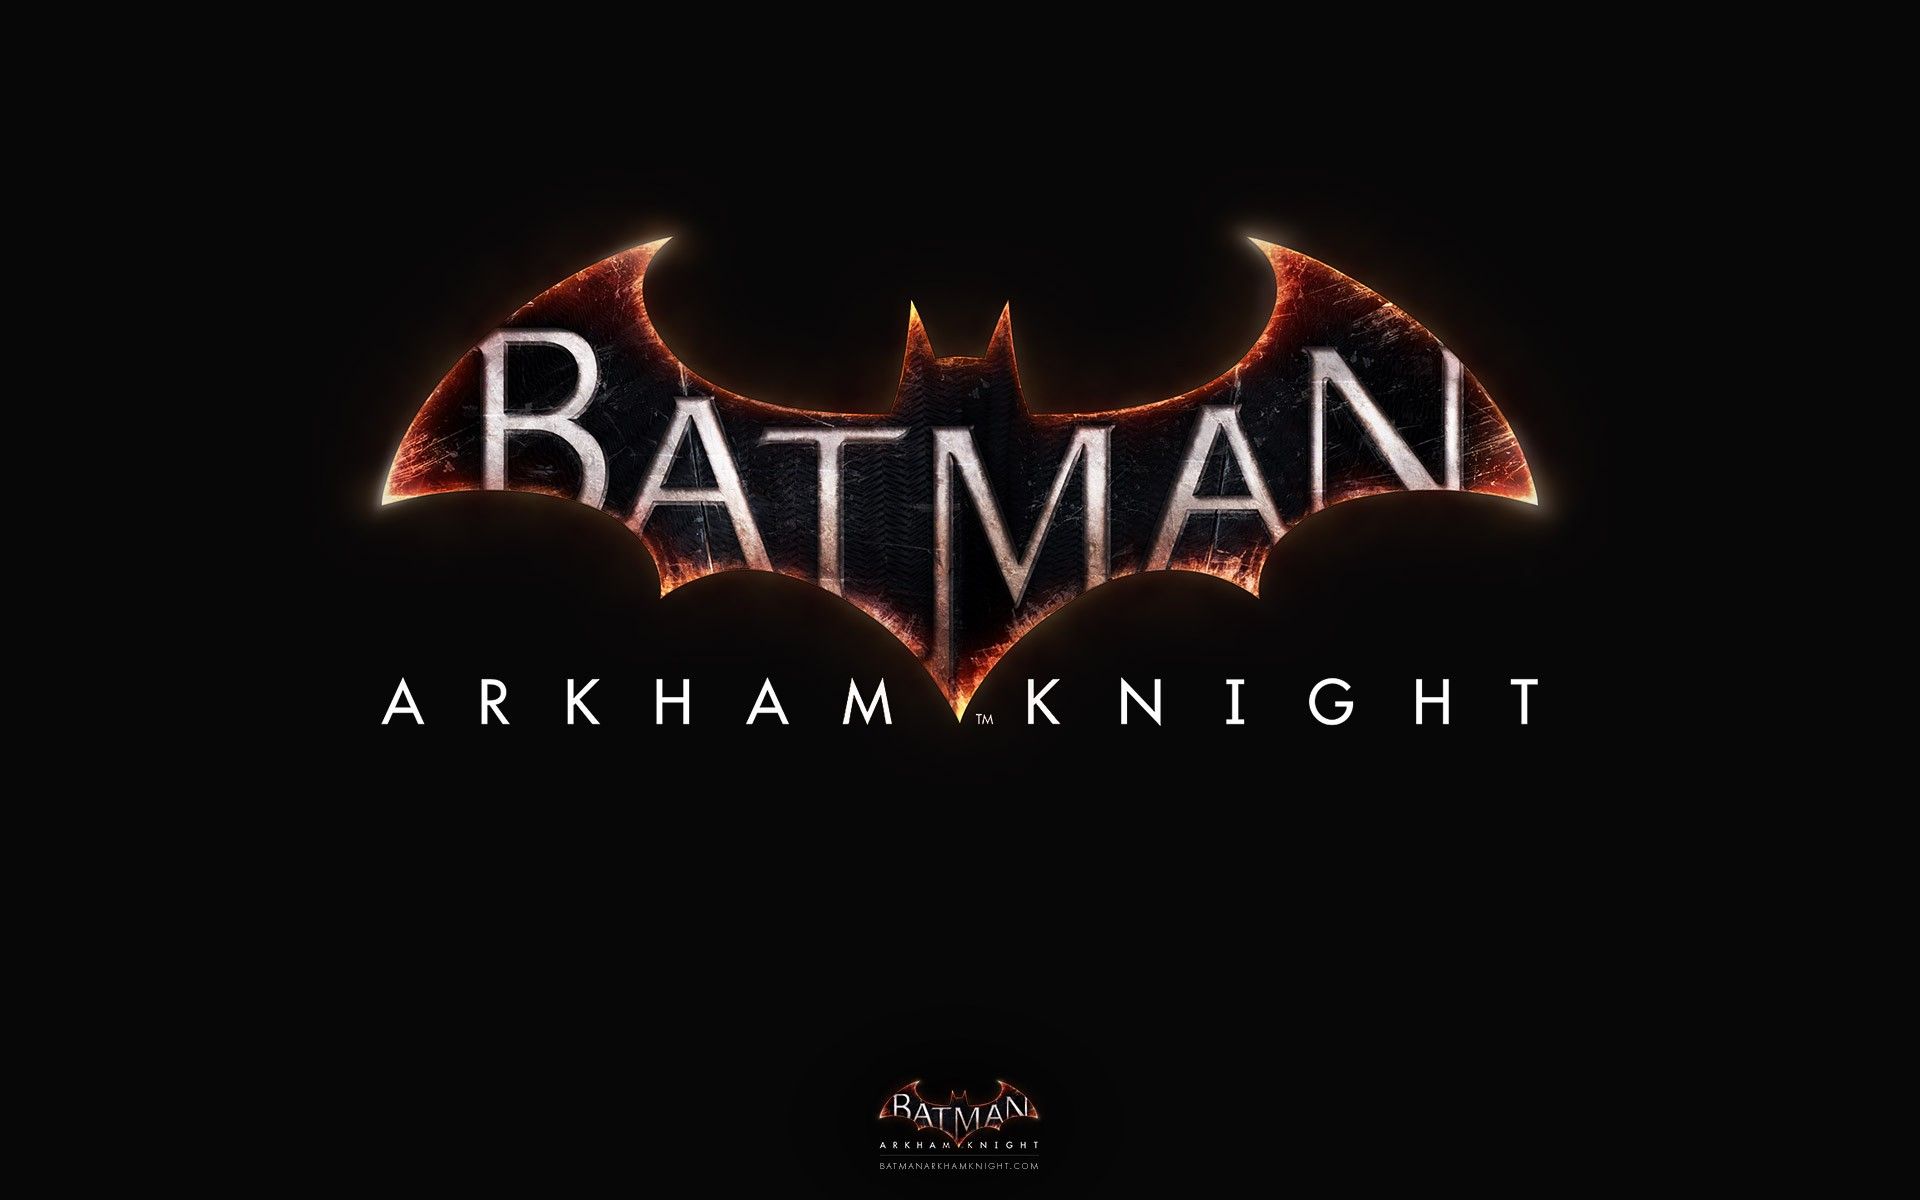 Batman: Arkham Knight v20201203 (+15 Trainer) [FLiNG] PC Trainer | MegaGames